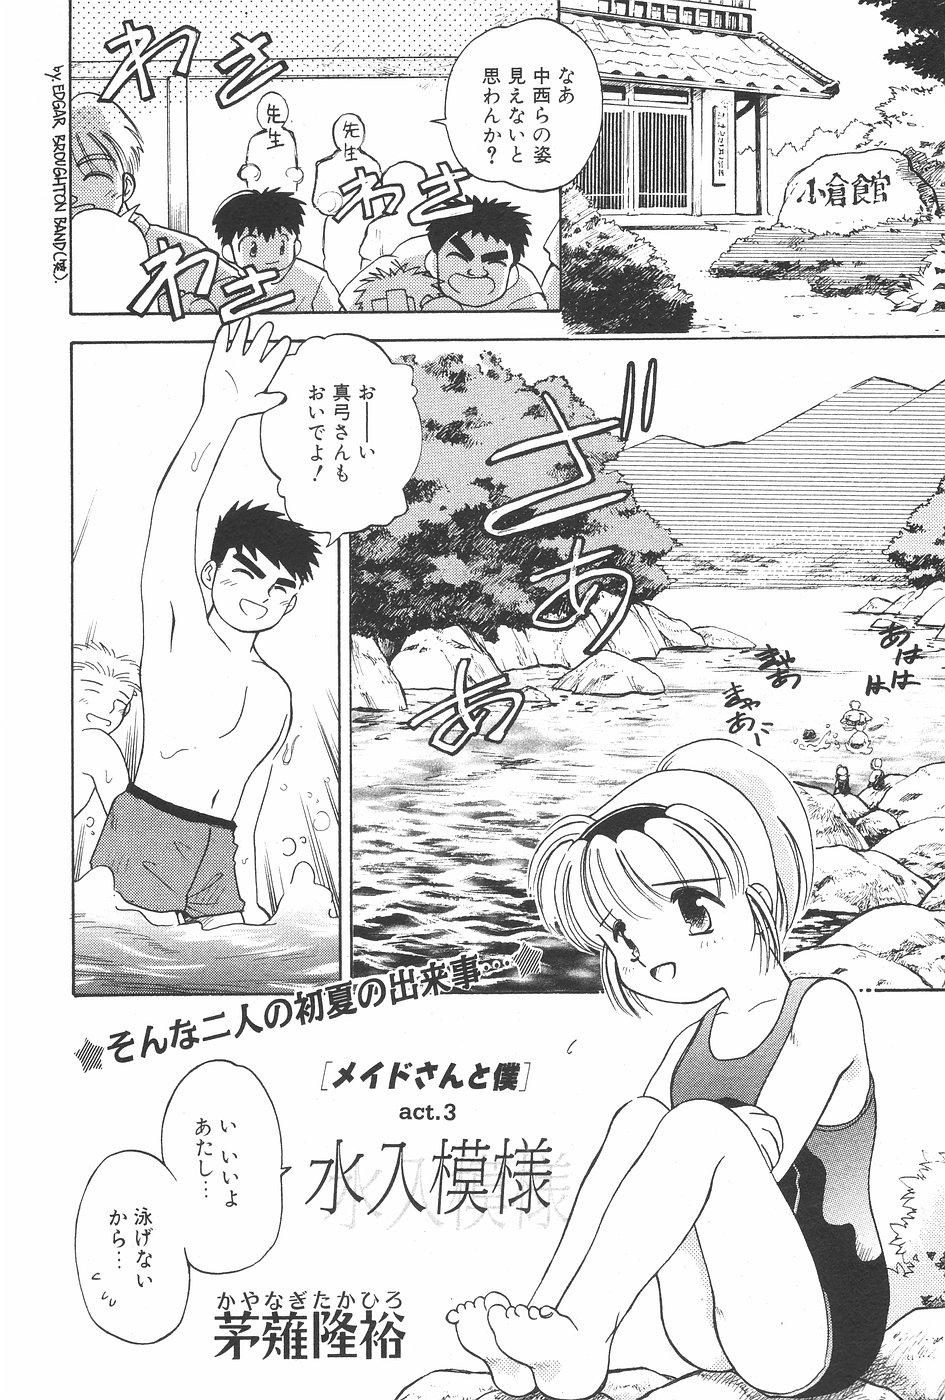 Manga Hotmilk 1997-07 54